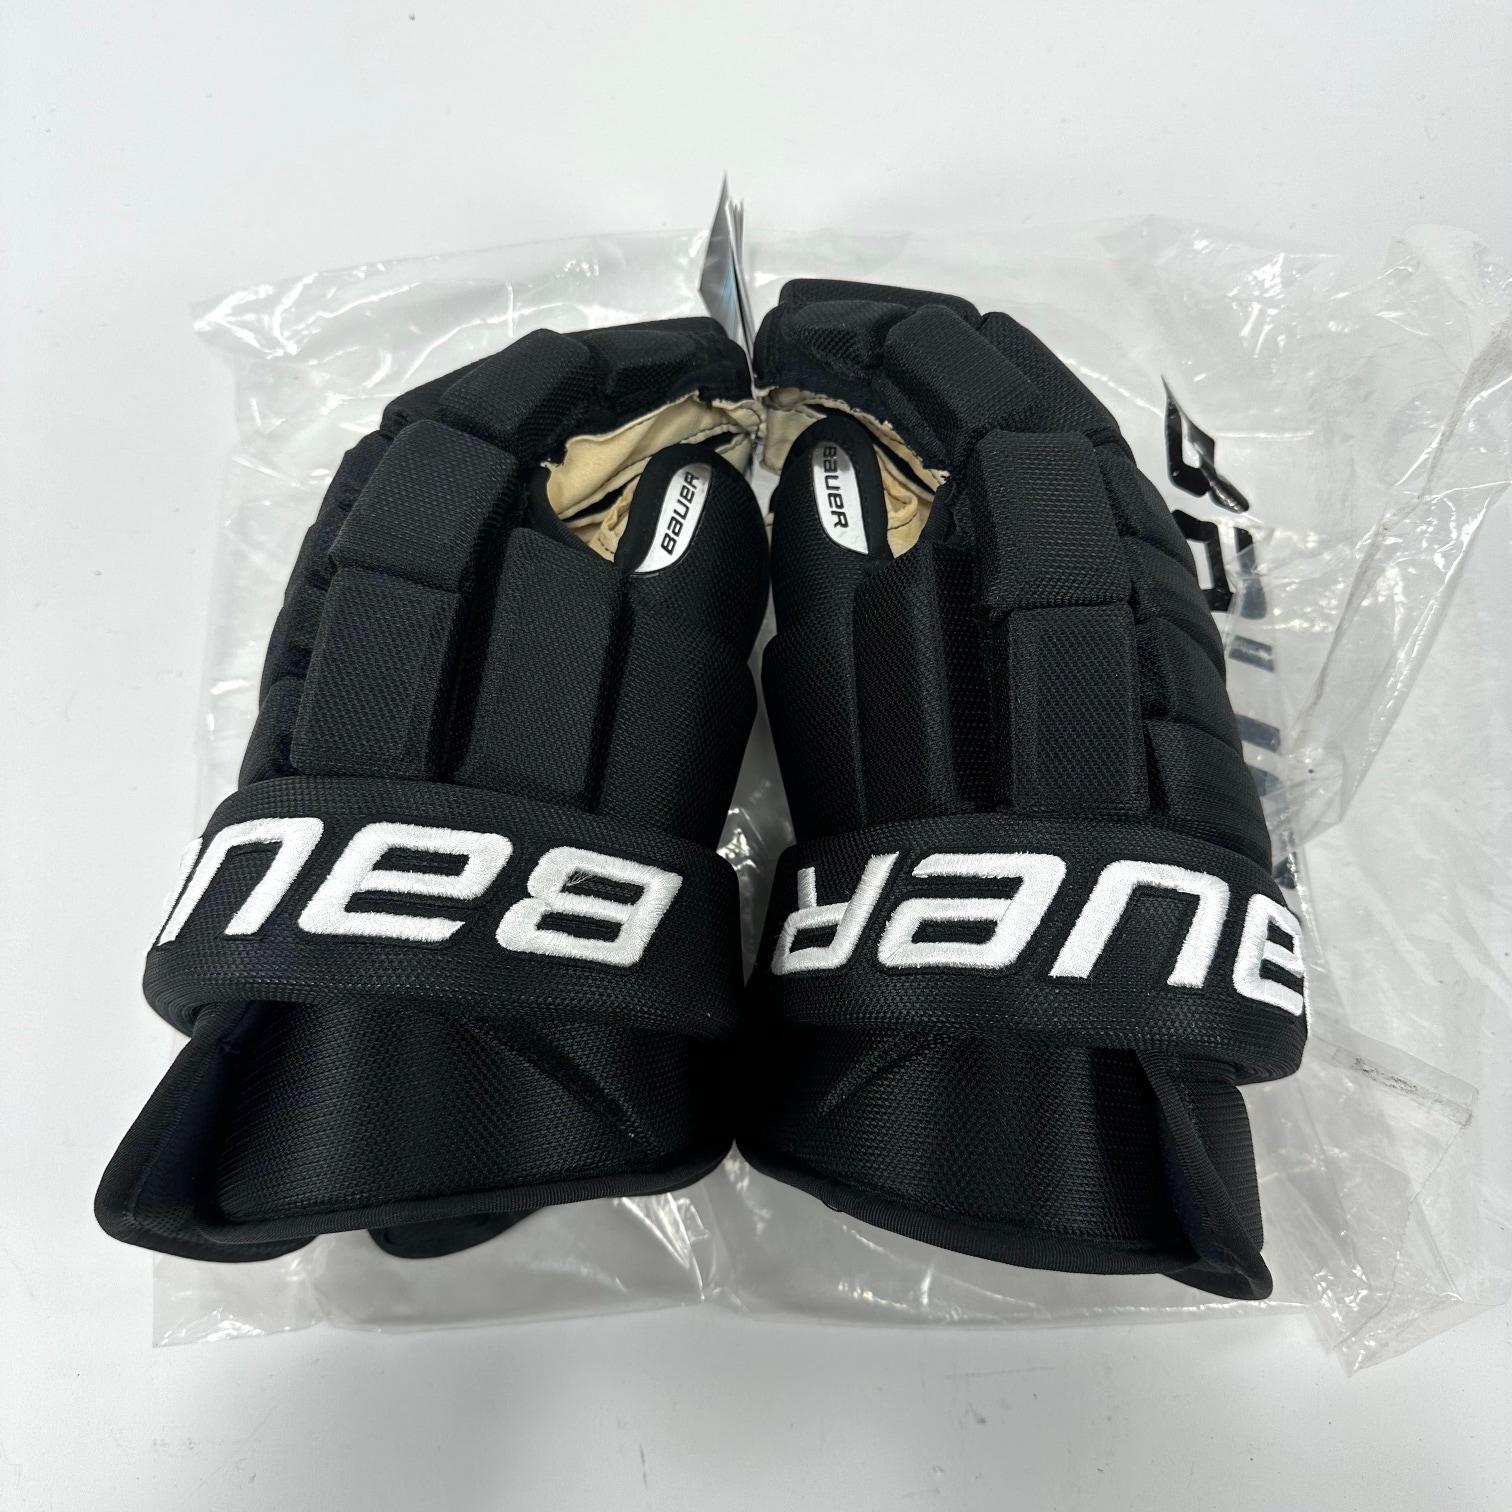 Brand New Black Bauer Vapor Pro Team Gloves 15" Pro Stock